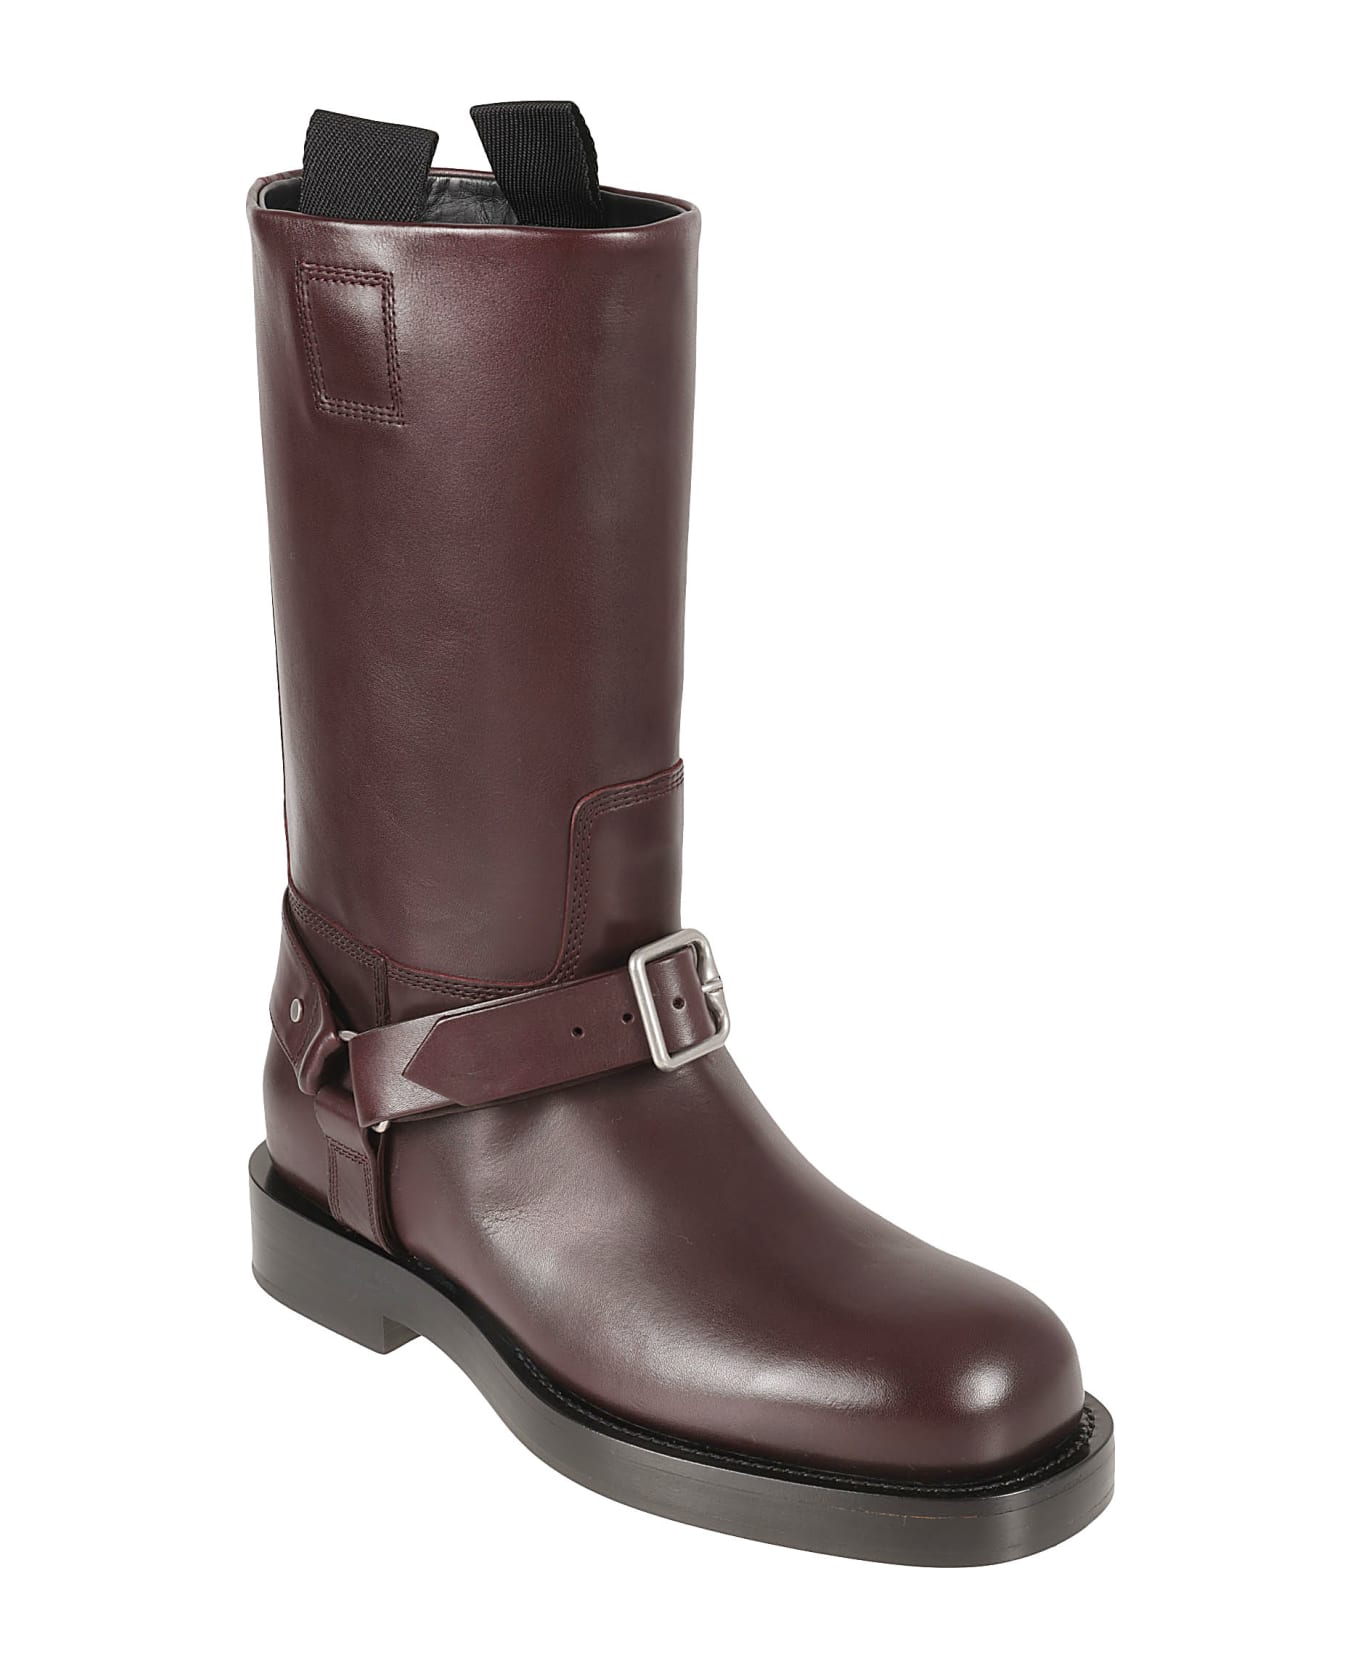 Burberry Saddle Boots - Aubergine